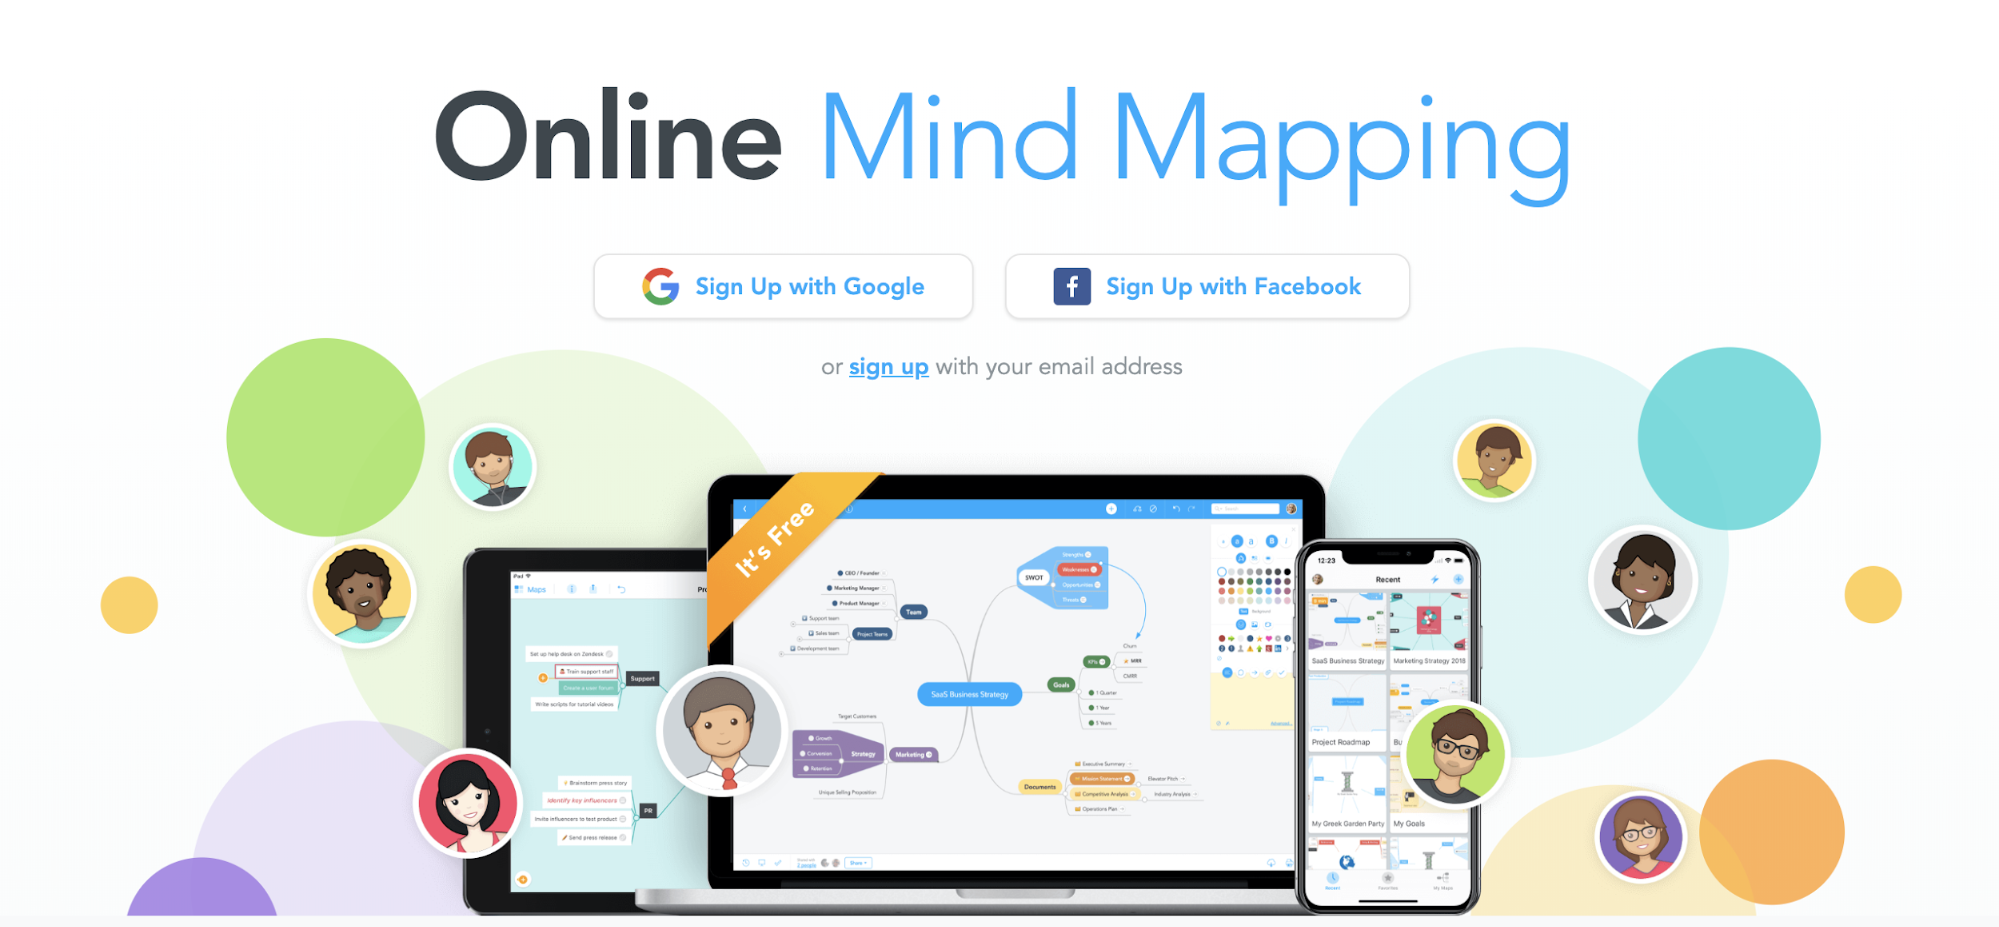 Future Content  MindMeister Mind Map